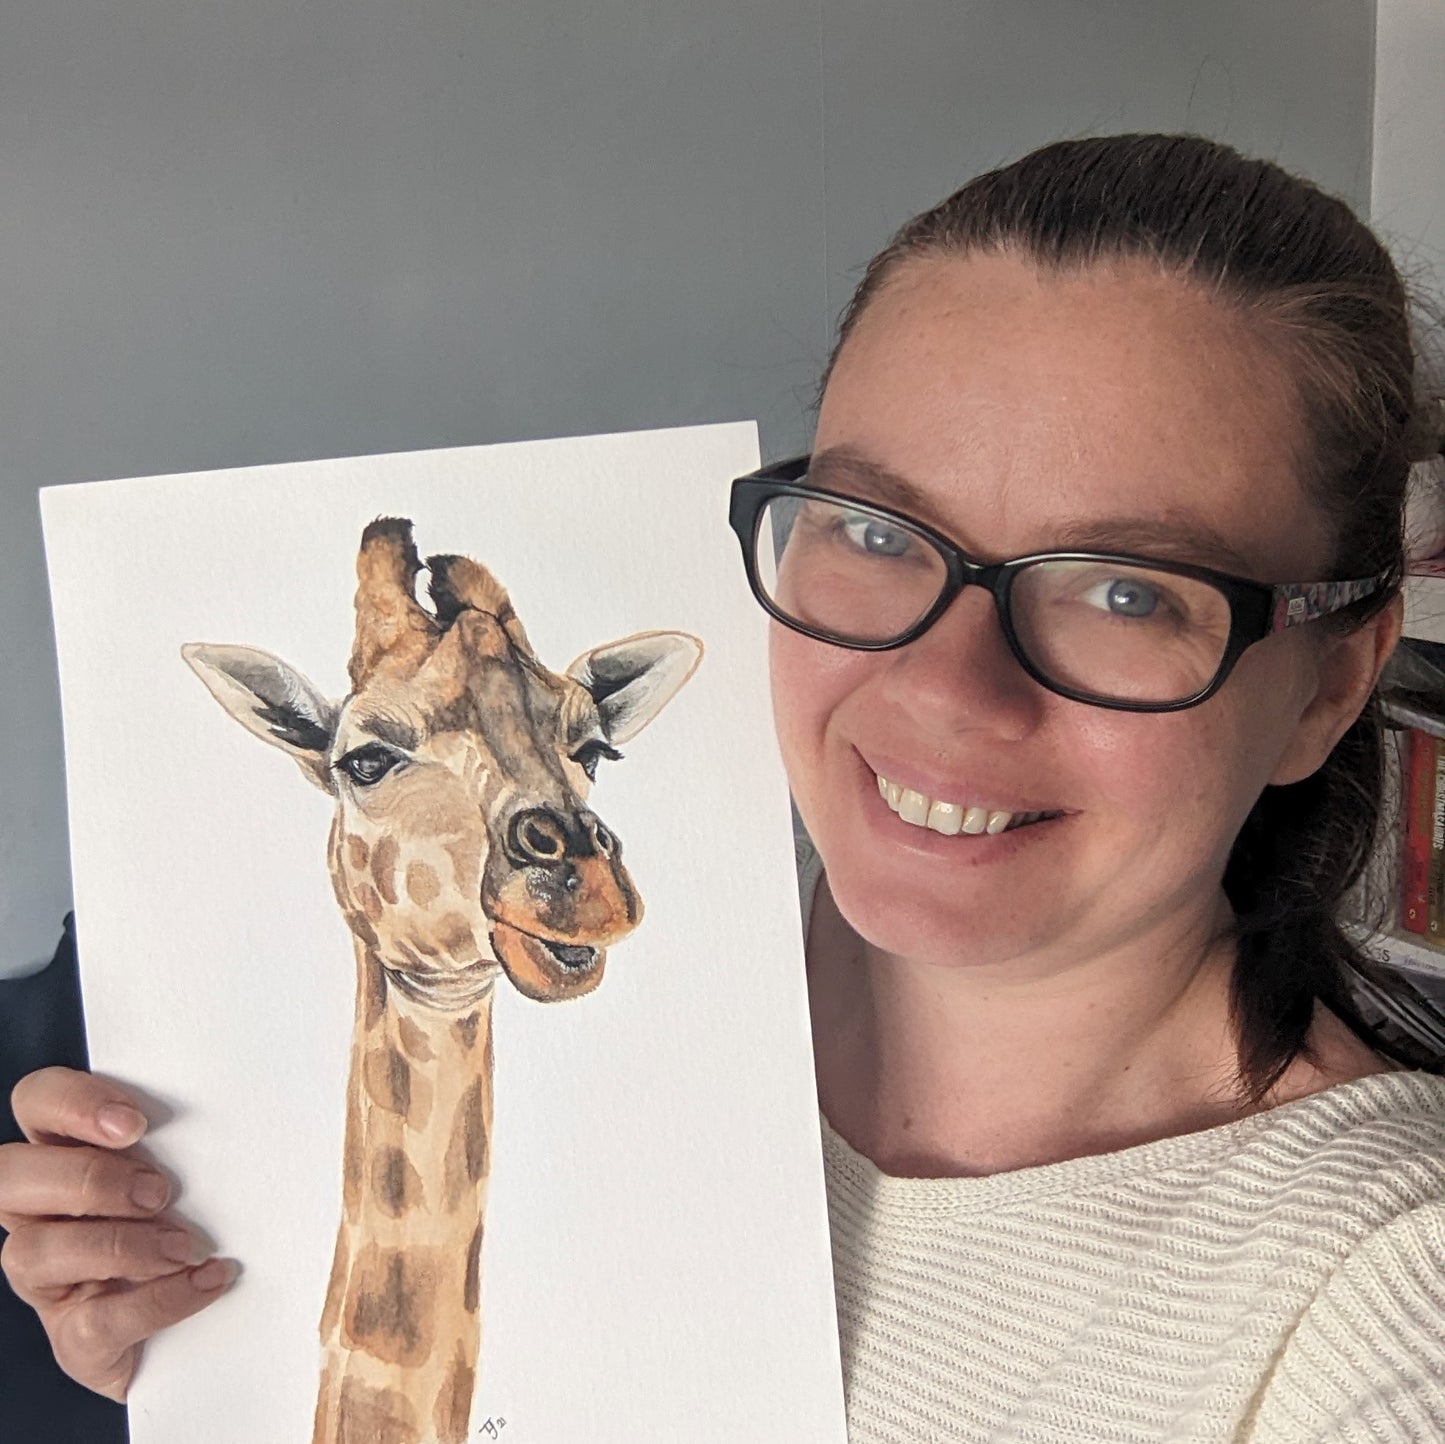 Original Watercolour of a giraffe "Stand Tall", A4